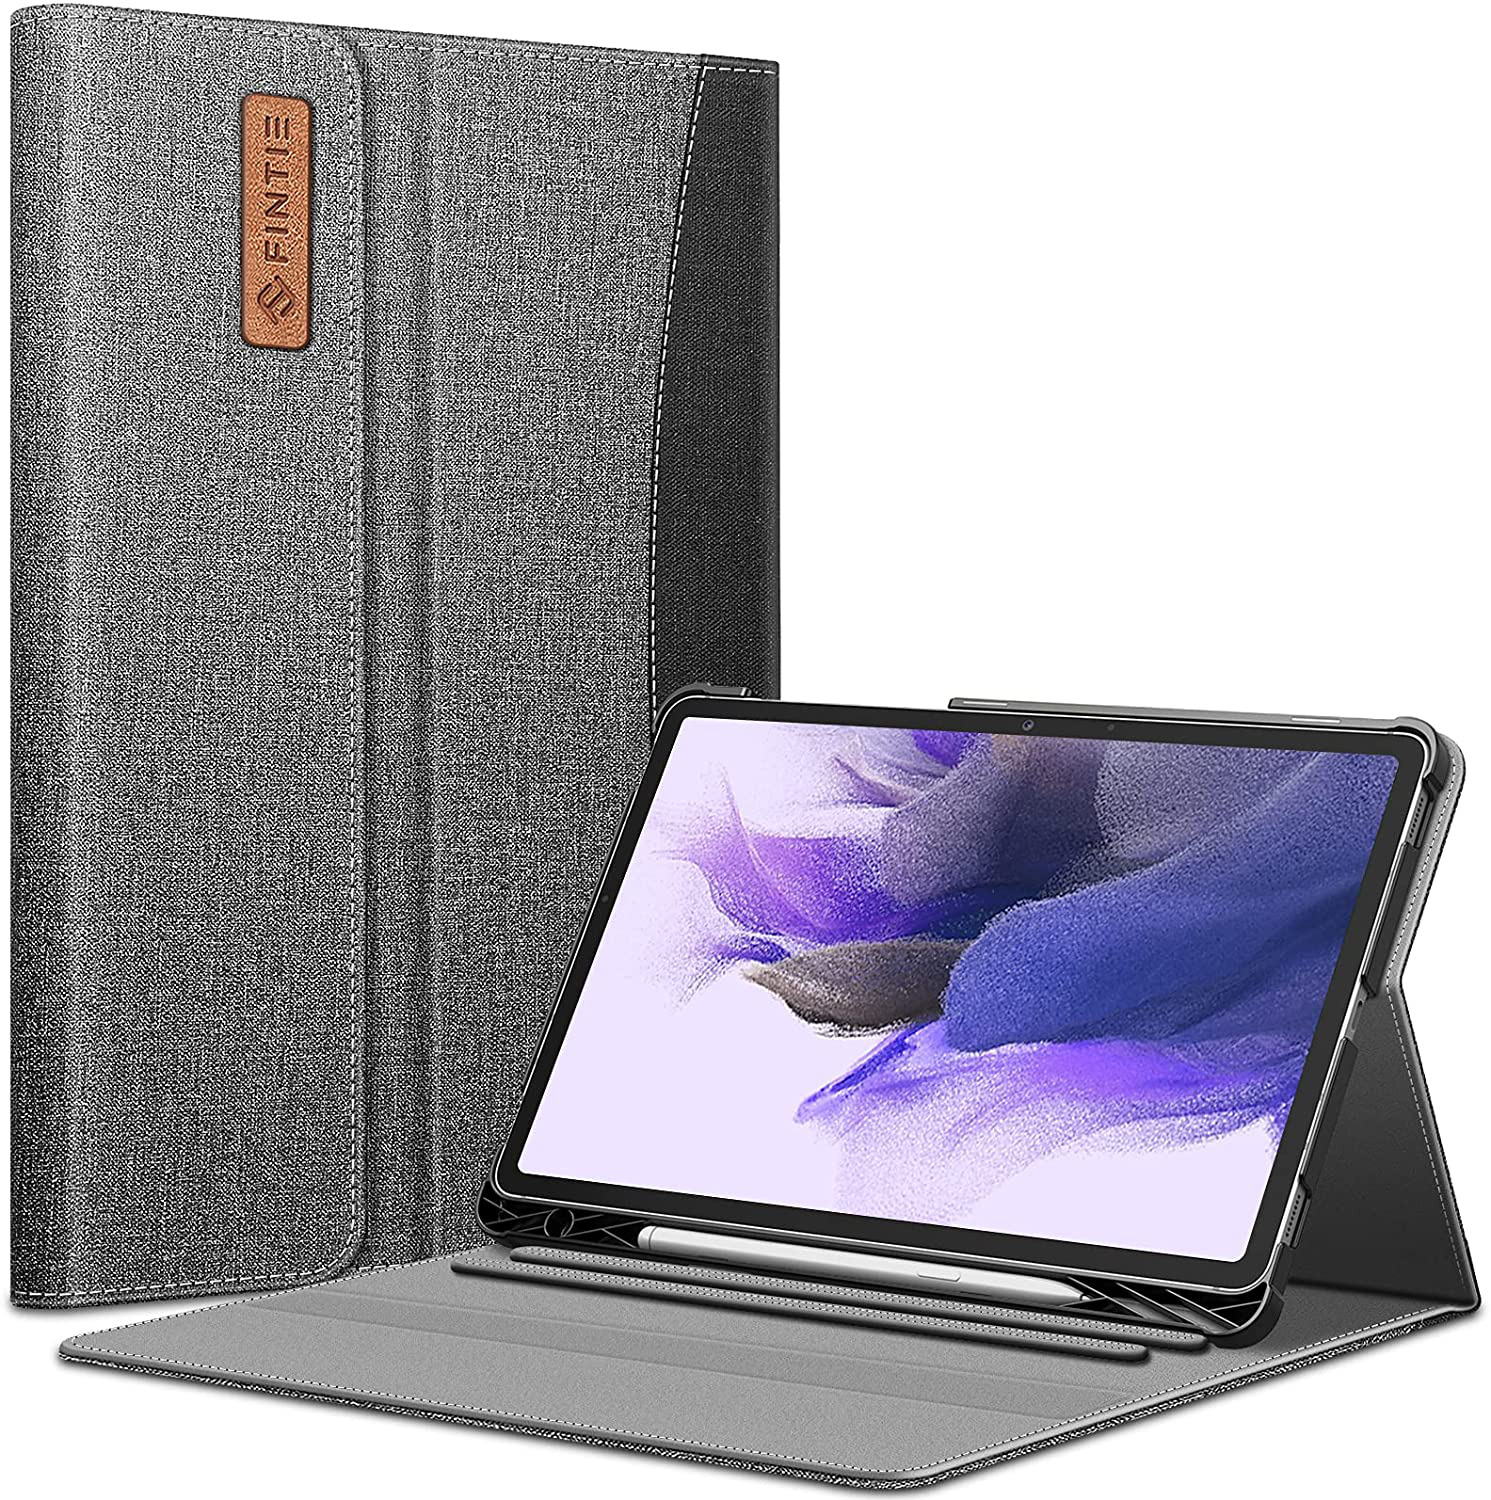 bluetech 7 inch tablet